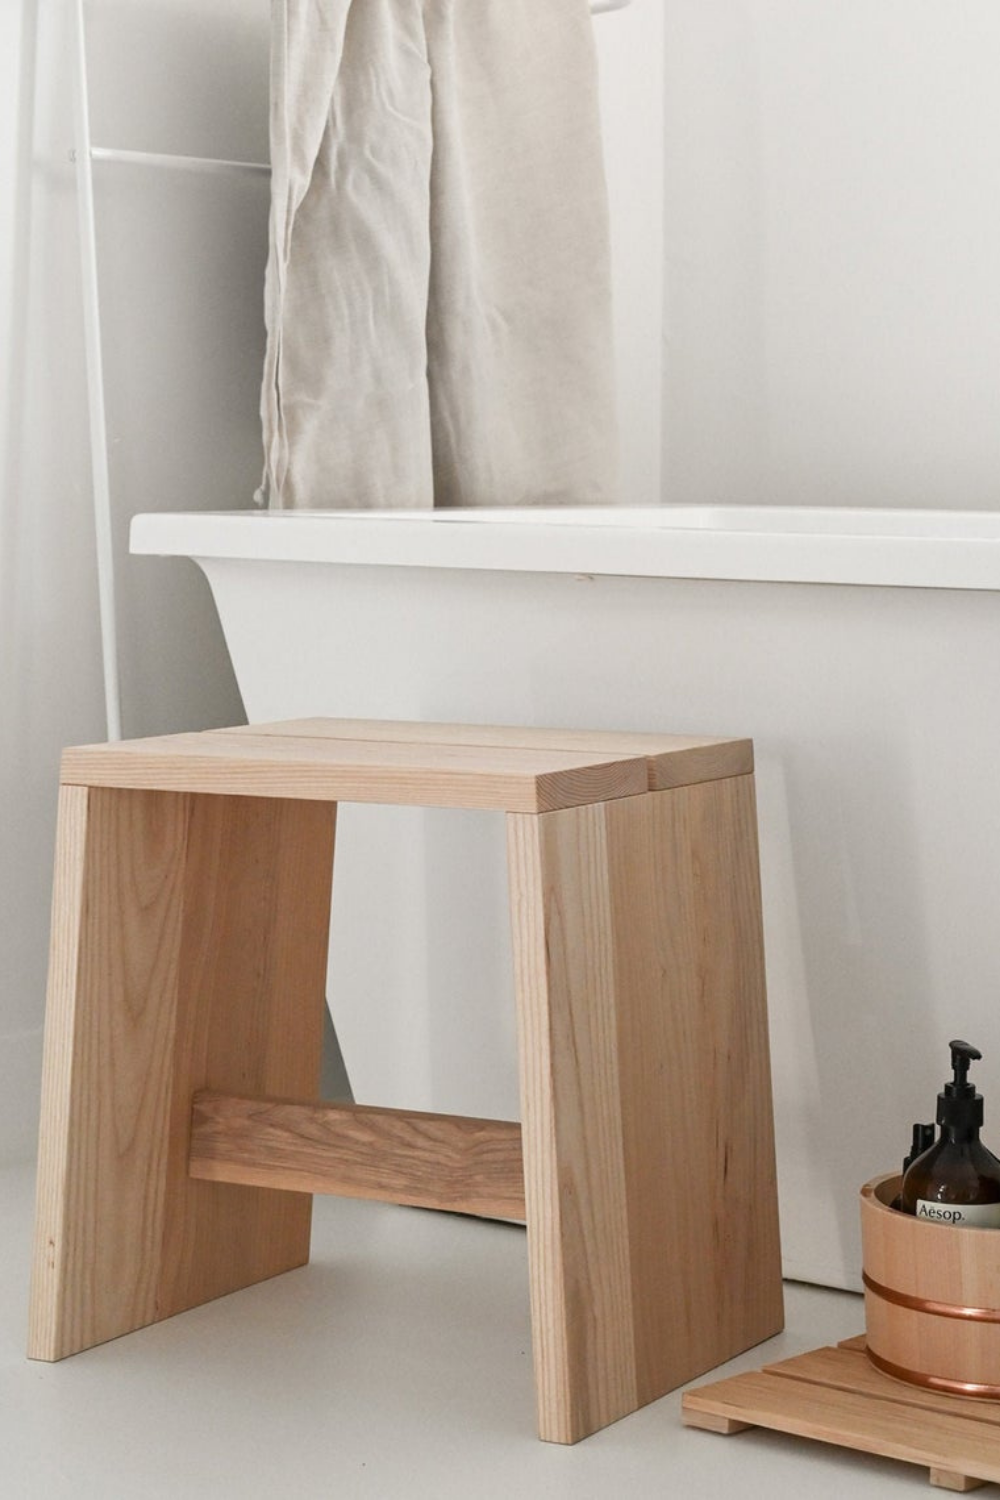 Japanese style stool by Etsy shop KROFT